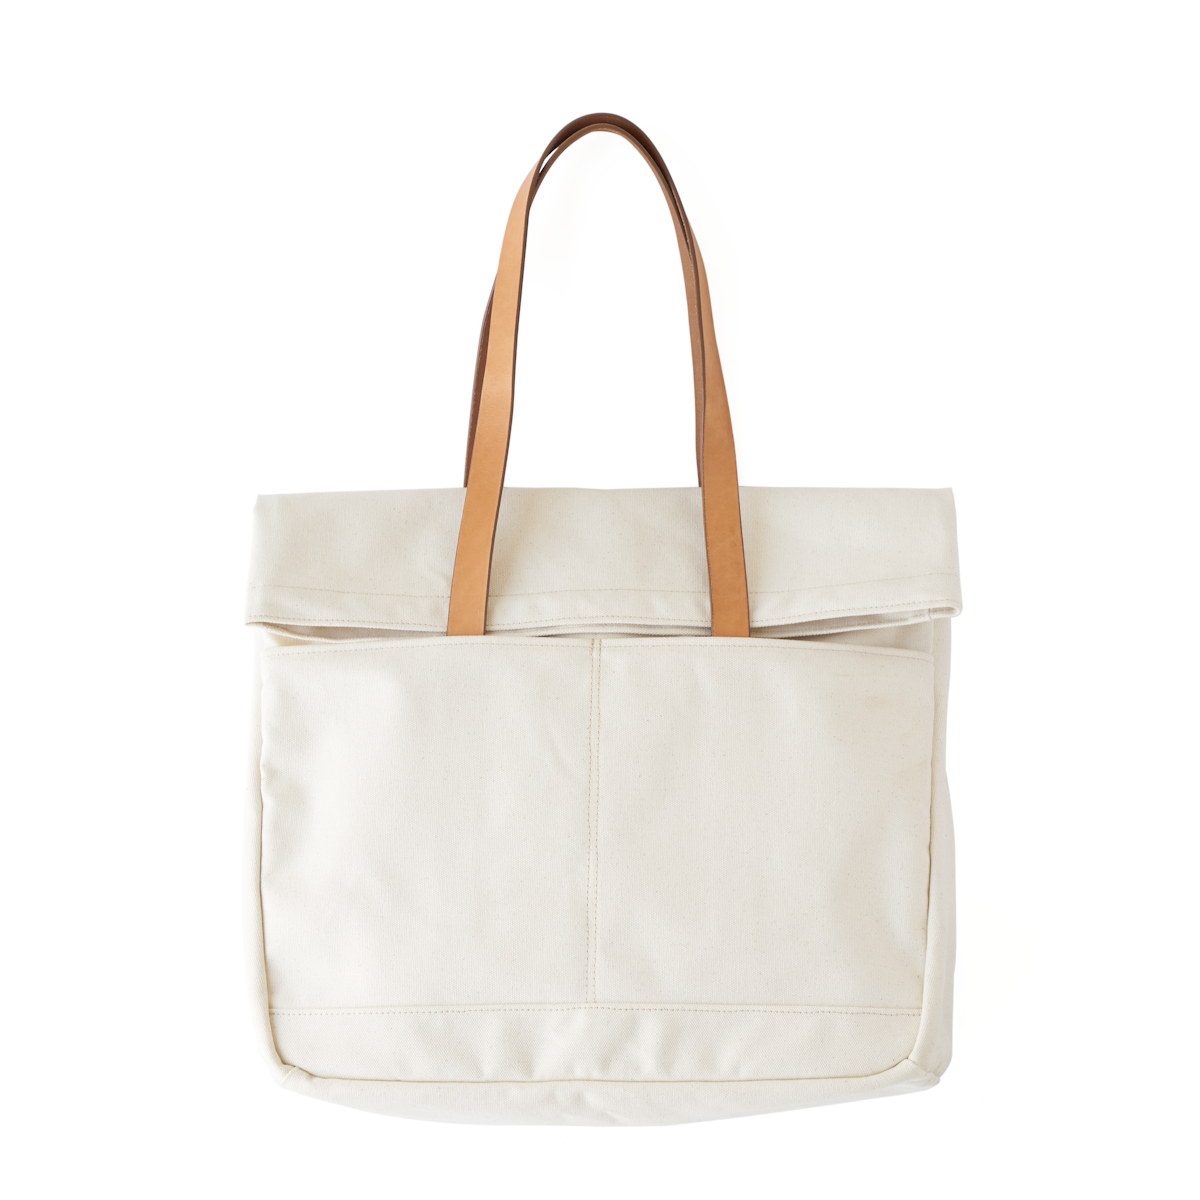 Mackjakors Authentic Bag Female Summer Large Capacity Tote Pack